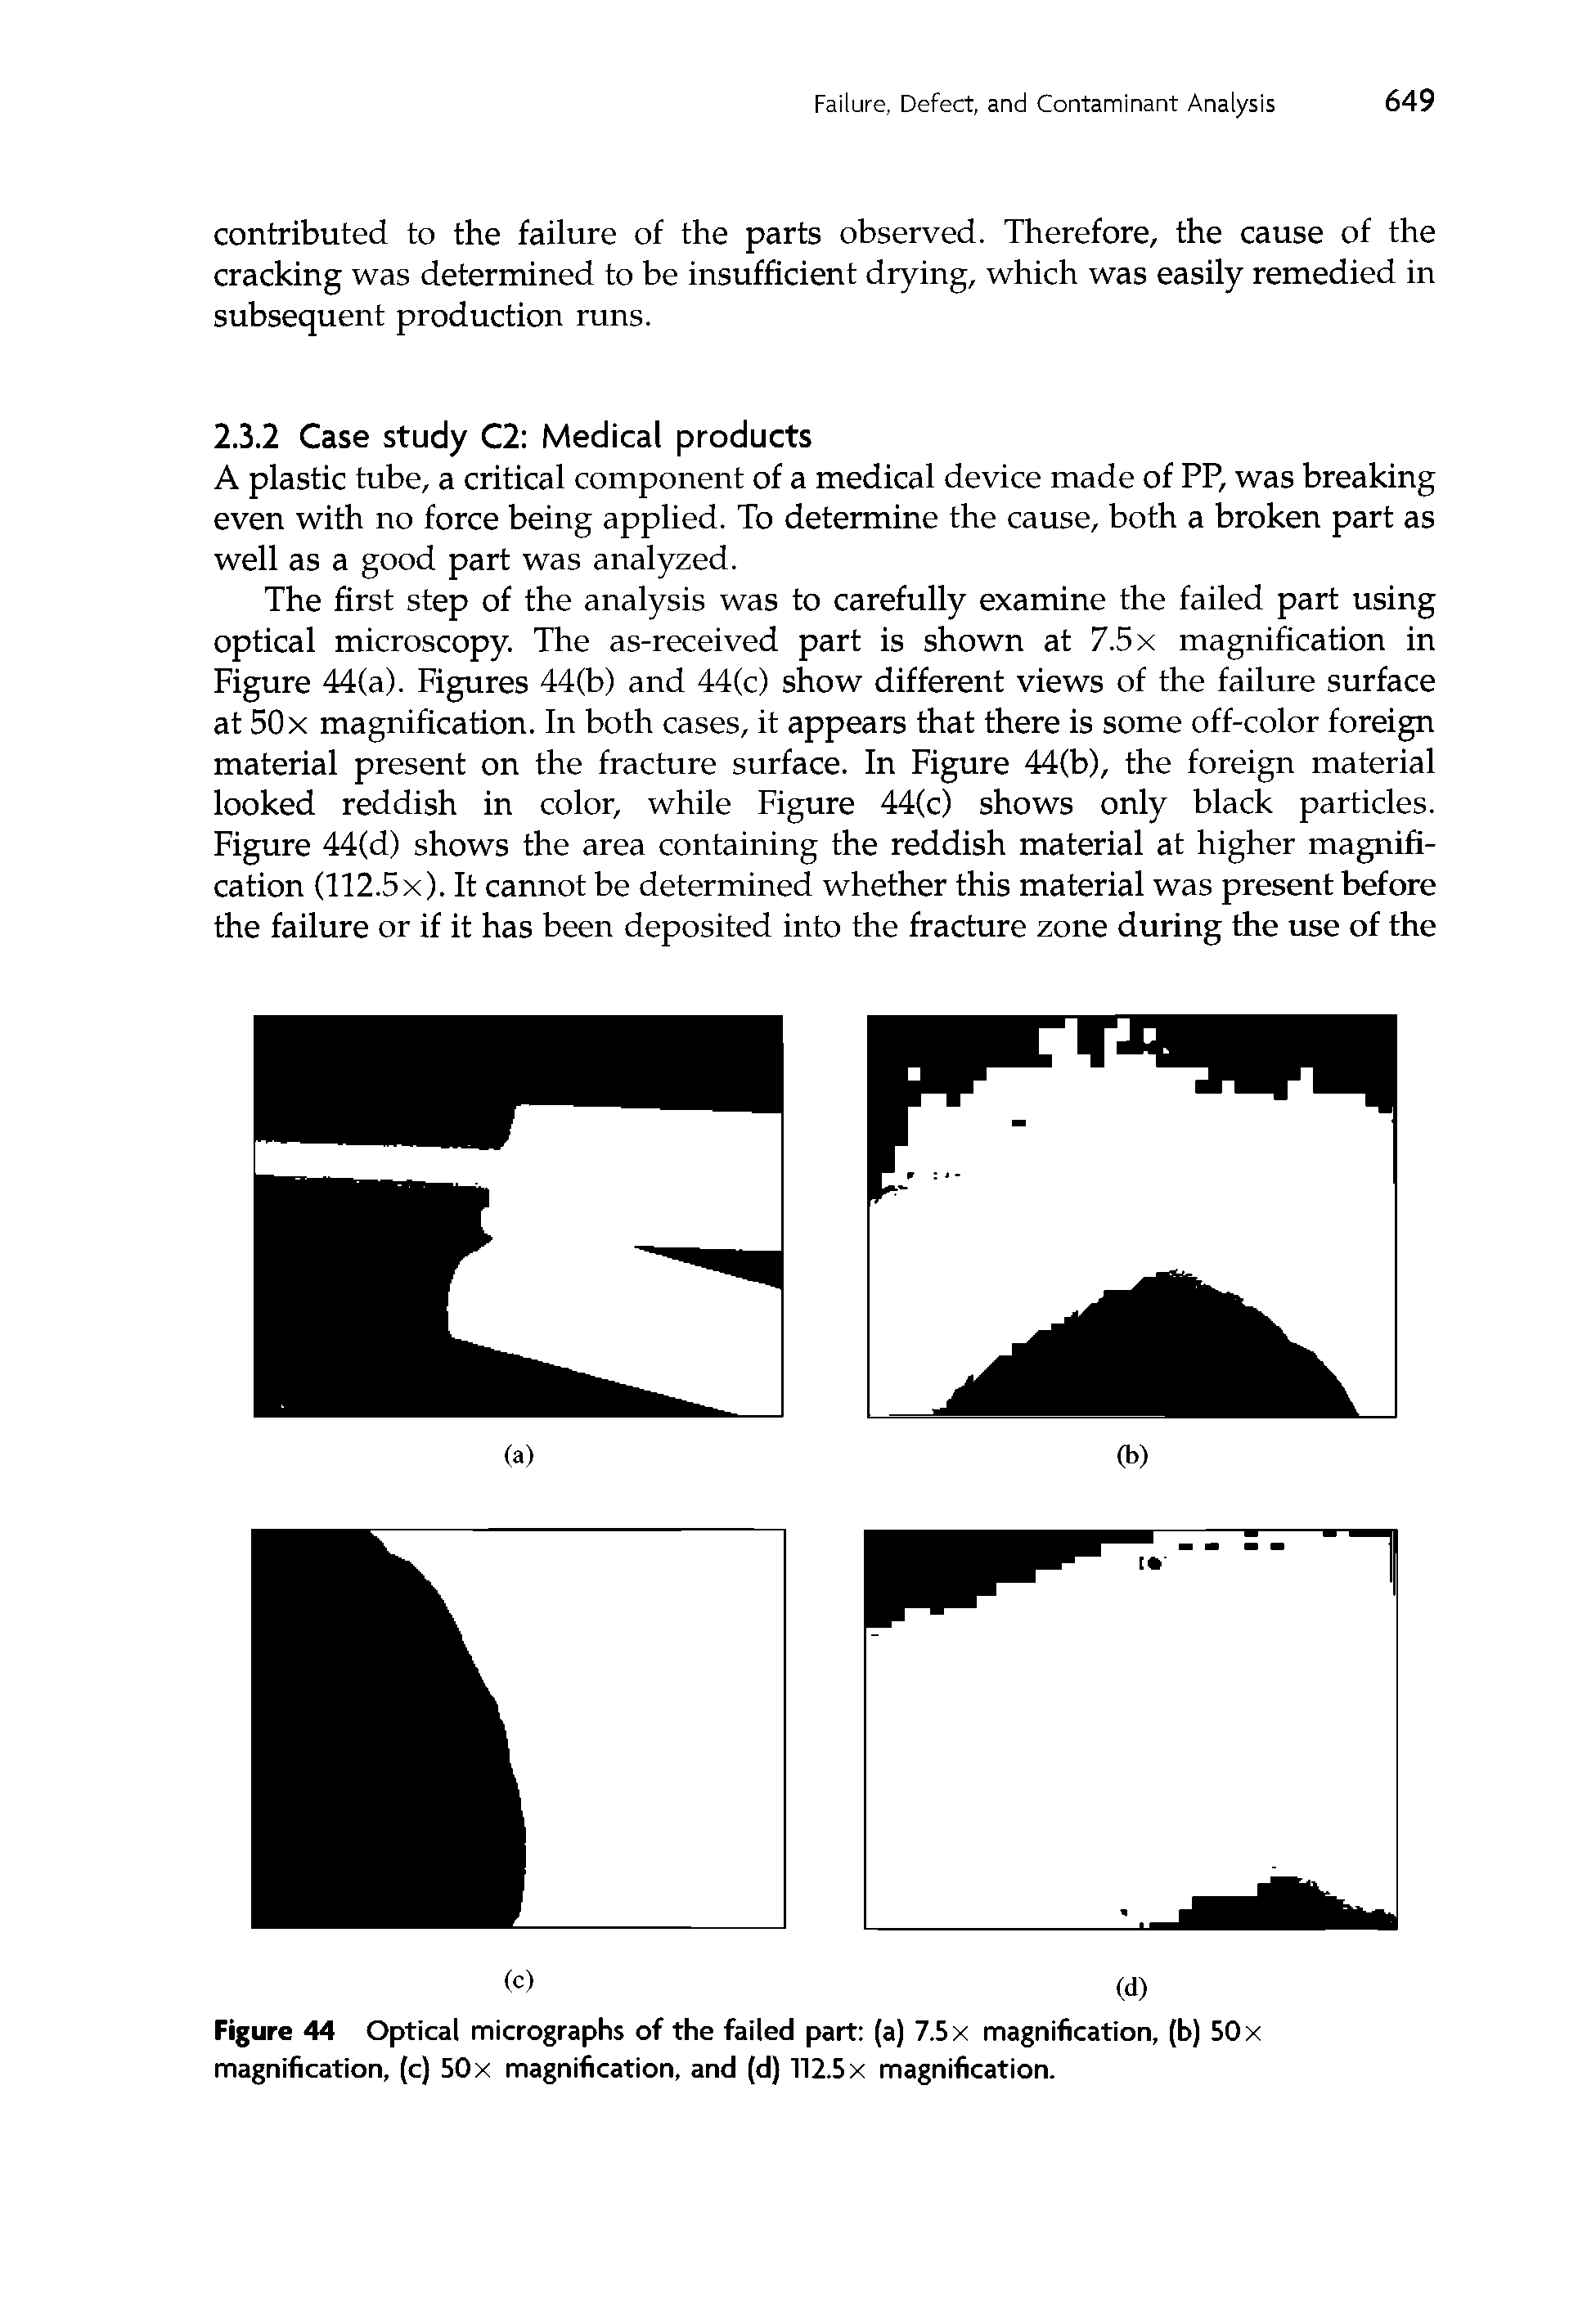 Figure 44 Optical micrographs of the failed part (a) 7.5 x magnification, (b) 50 x magnification, (c) 50 x magnification, and (d) 112.5 x magnification.